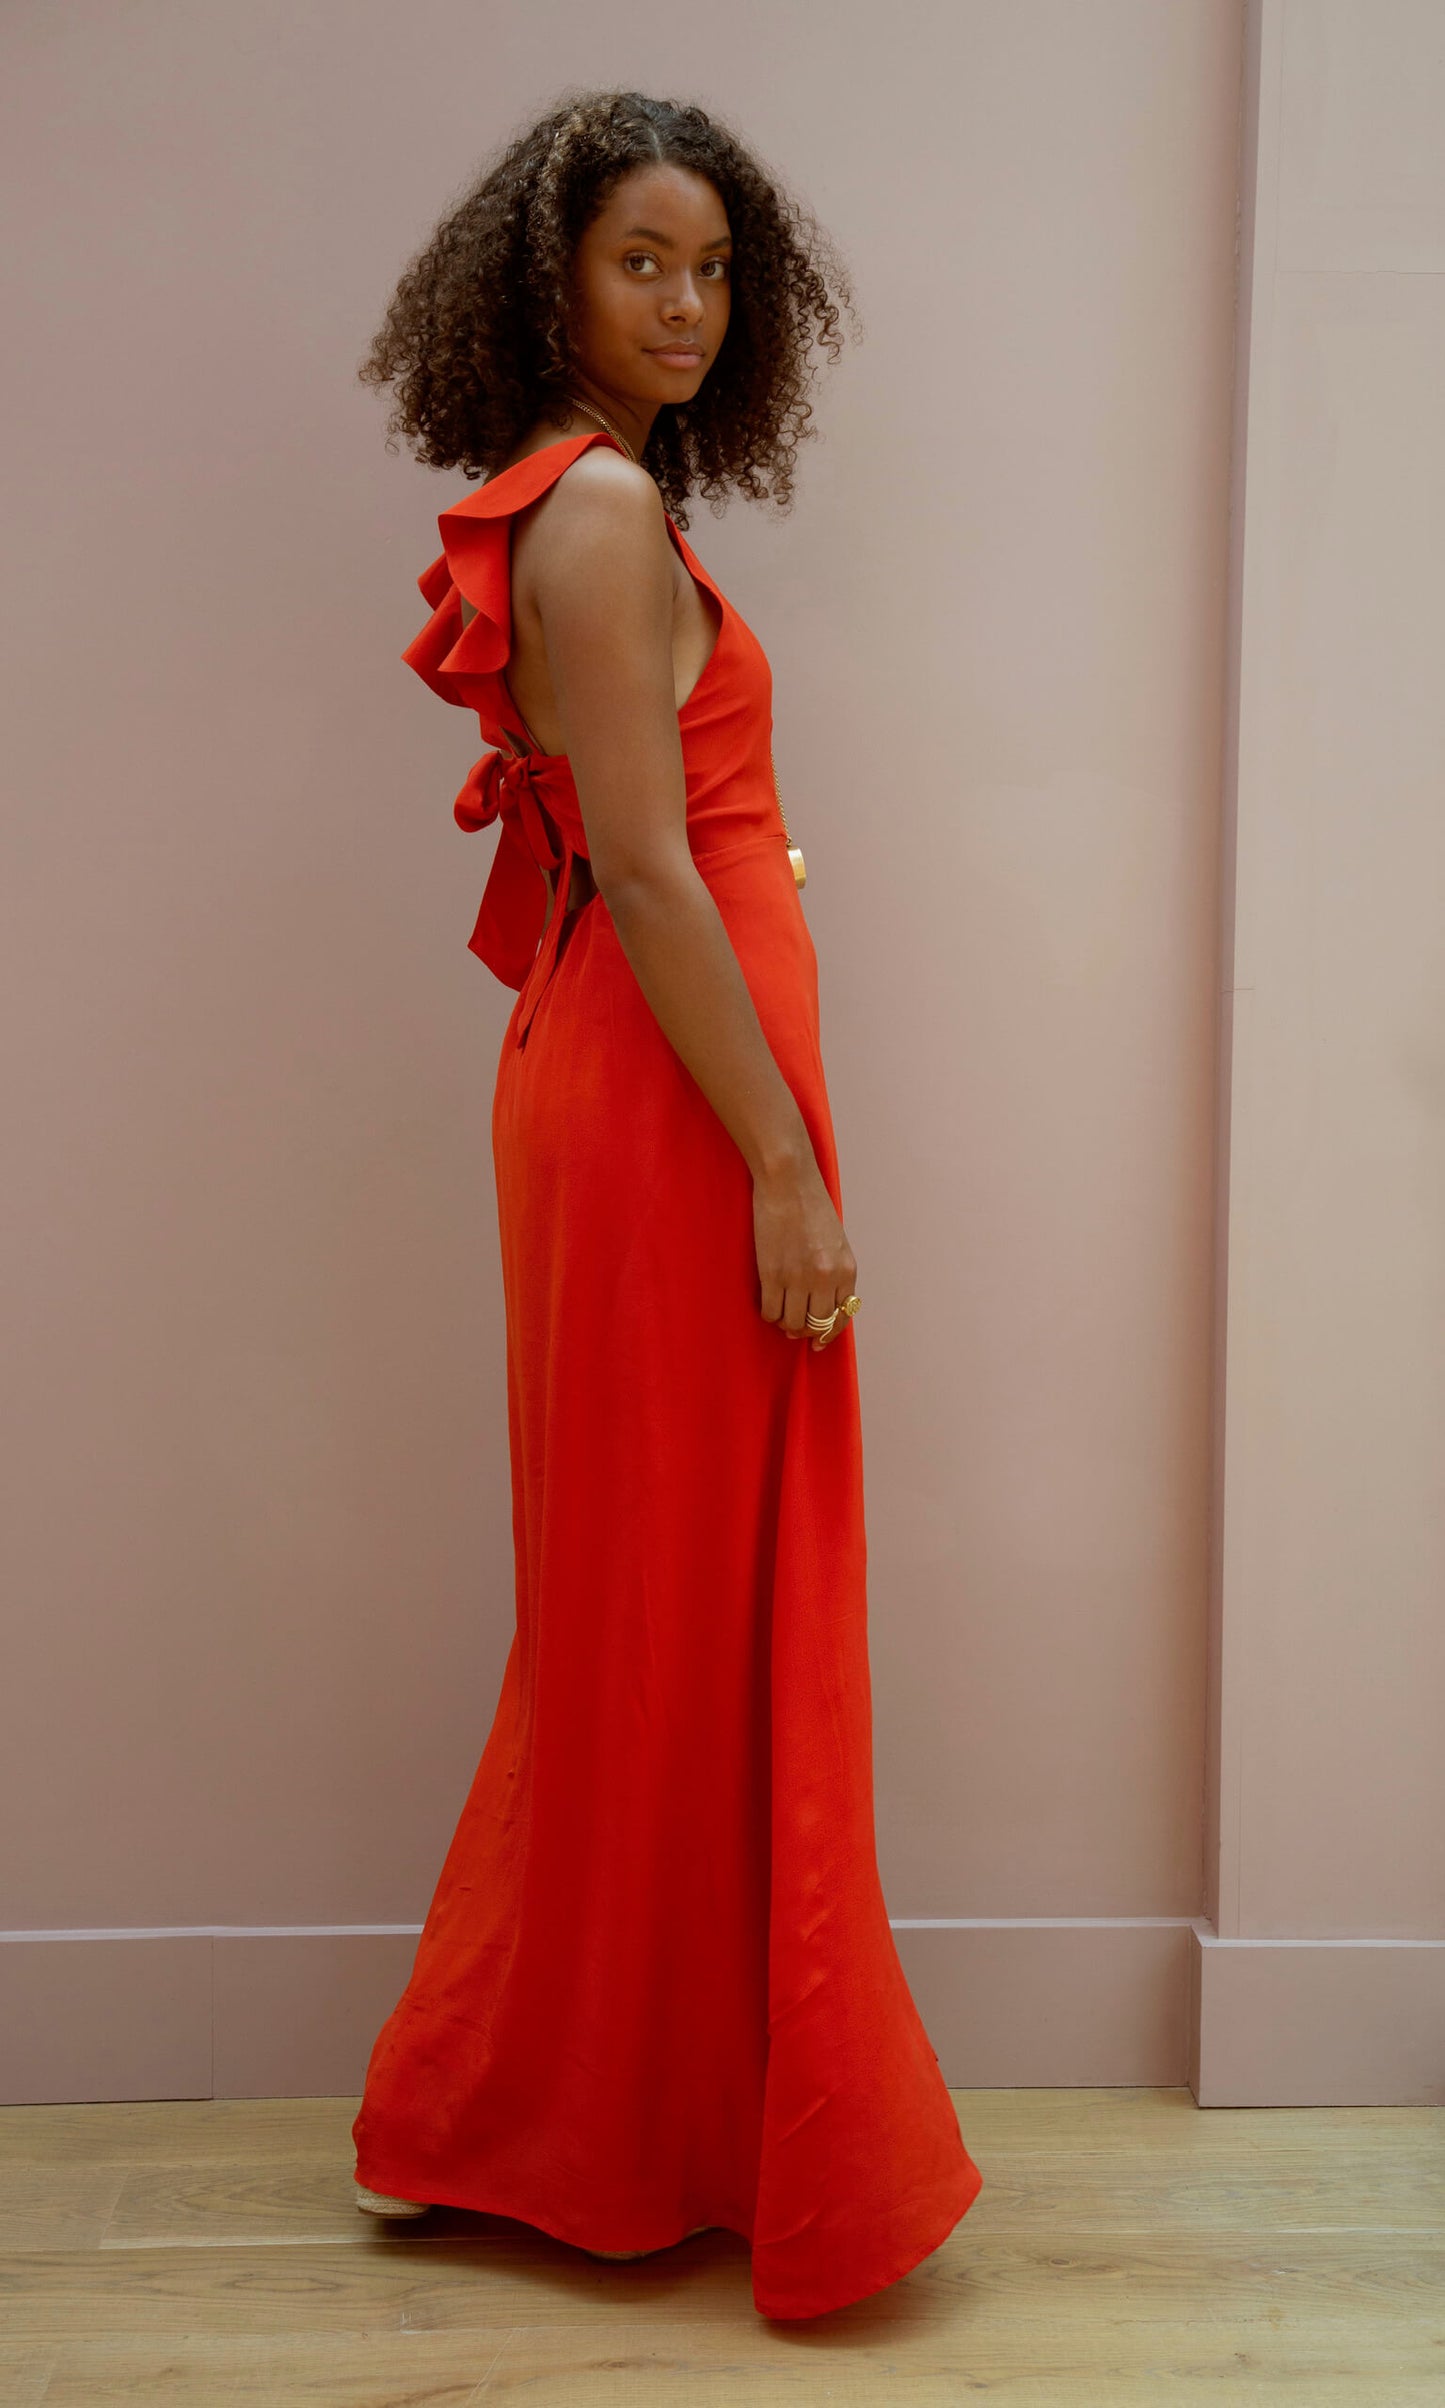 Bright red bespoke bridesmaid dress against blush background